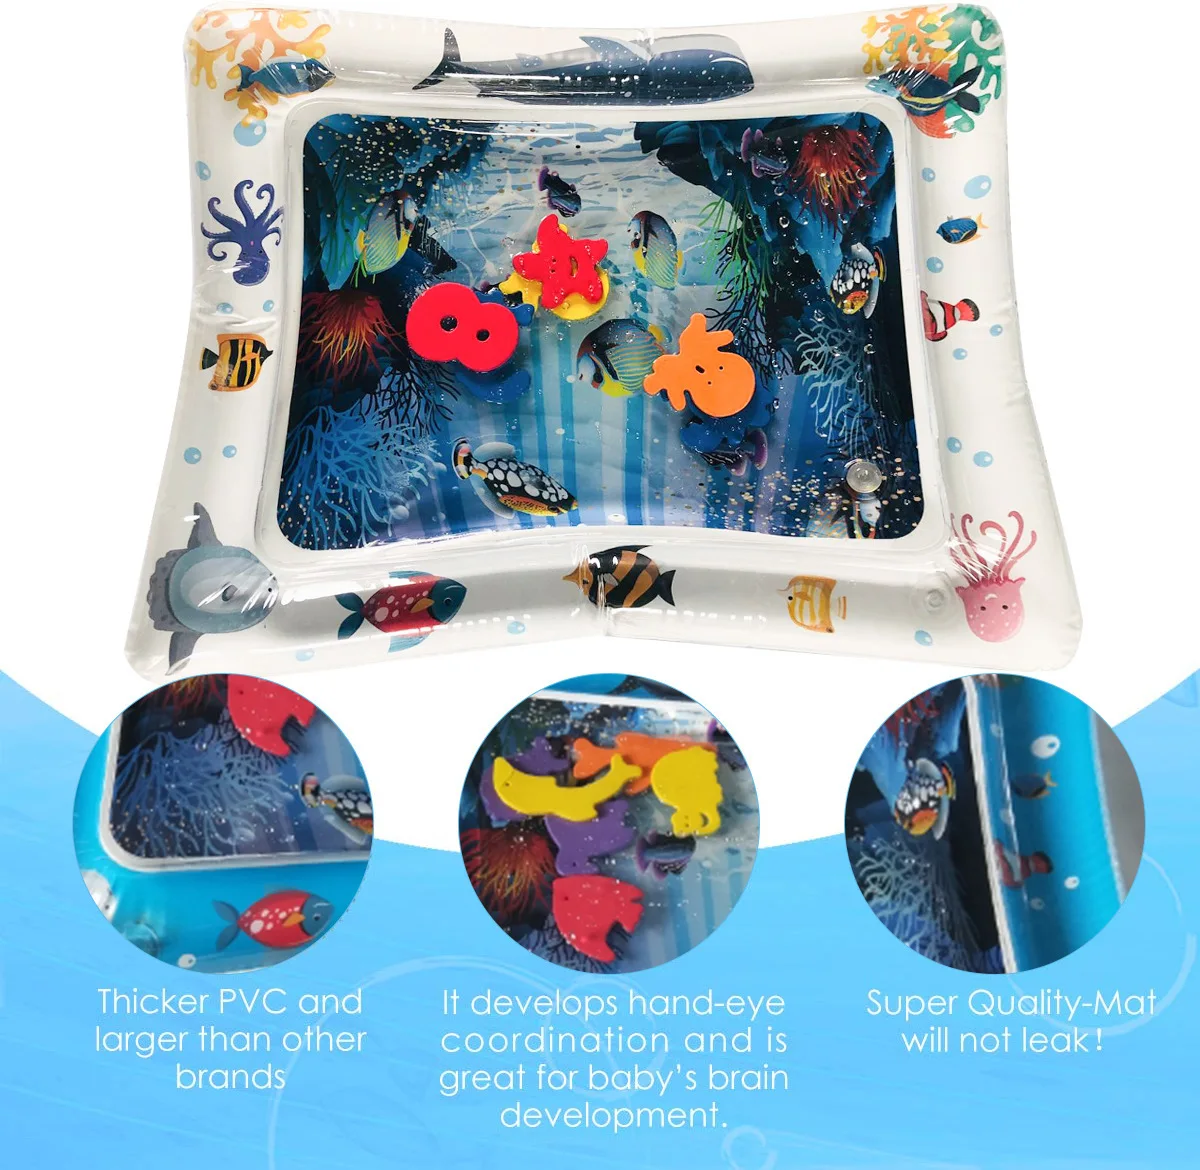 HTB1zuXlMNjaK1RjSZFAq6zdLFXas Baby Inflatable Water Play Mat Infant Summer Beach Water Mat Toddler Fun Activity Play Toys for Sensory Stimulation Motor Skills